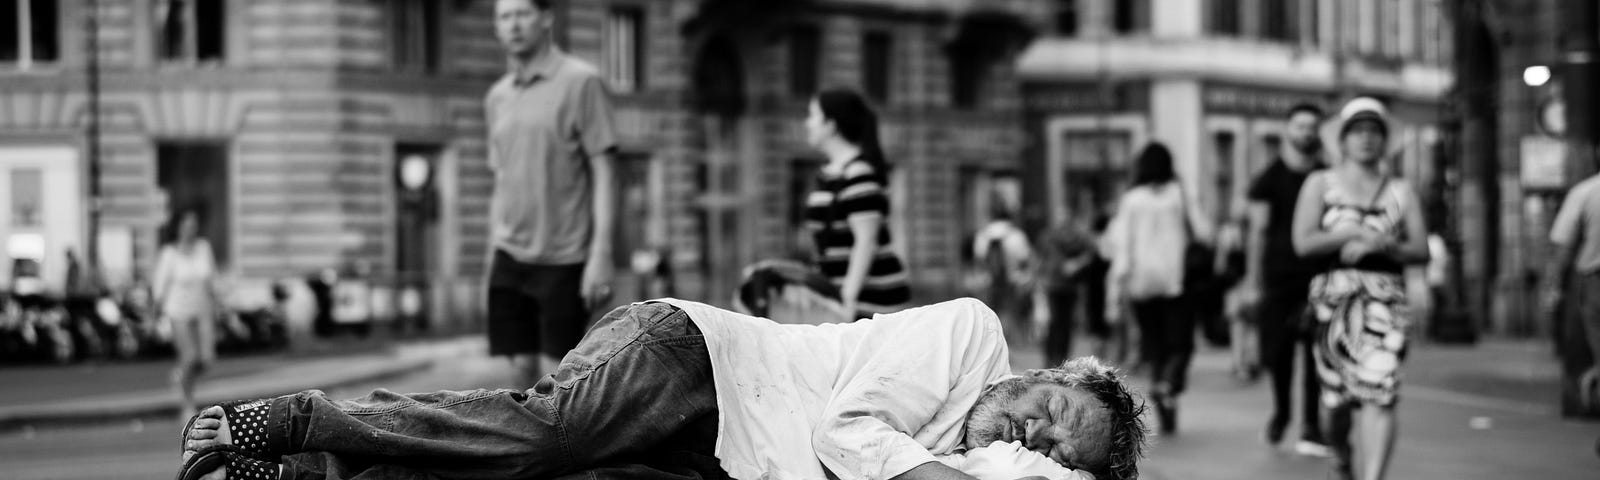 A man sleeping on bench | A Grain of Salt | by elbyjames